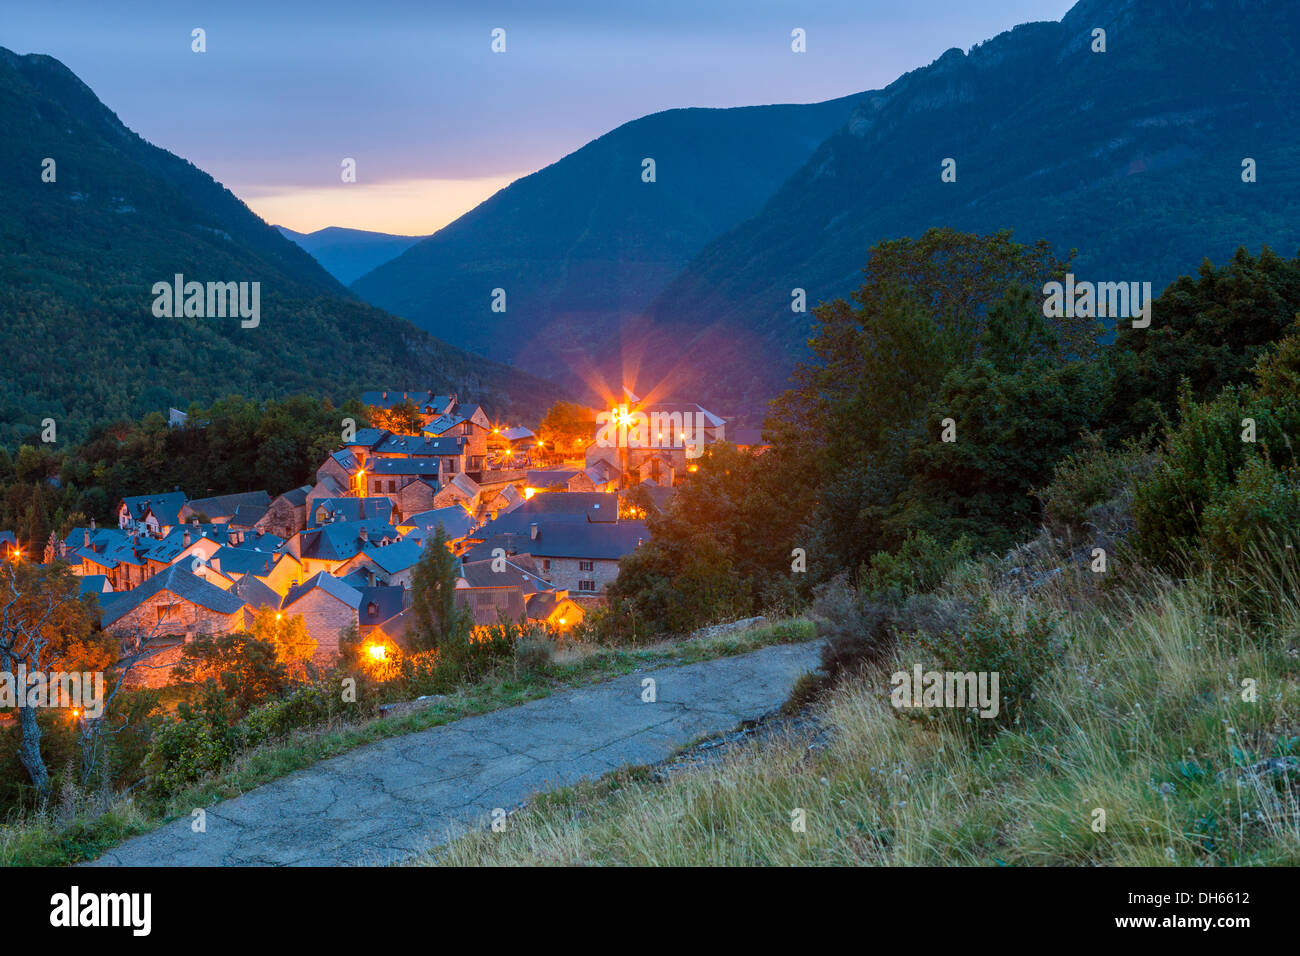 Hoz de Jaca, Pyrenees, Huesca province, Aragon, Spain, Europe. Stock Photo